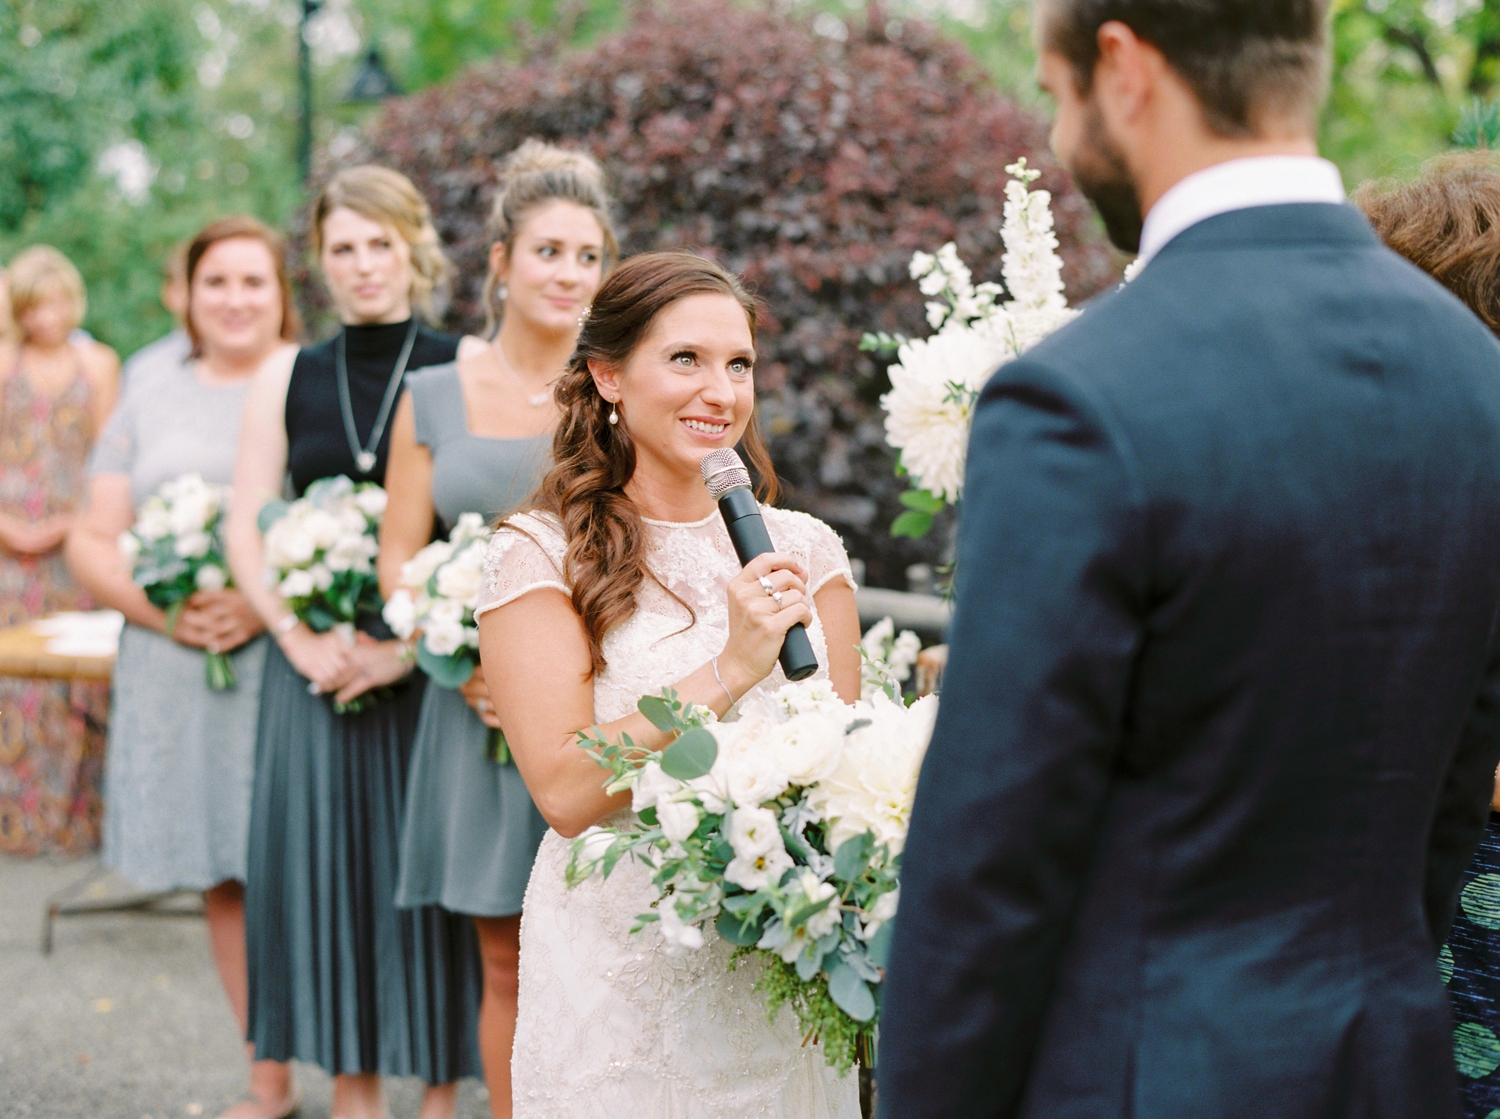 Calgary wedding photographers | fine art film | Justine Milton Photography | wedding inspiration | wedding chairs | wedding flowers | wedding ceremony | bride and groom